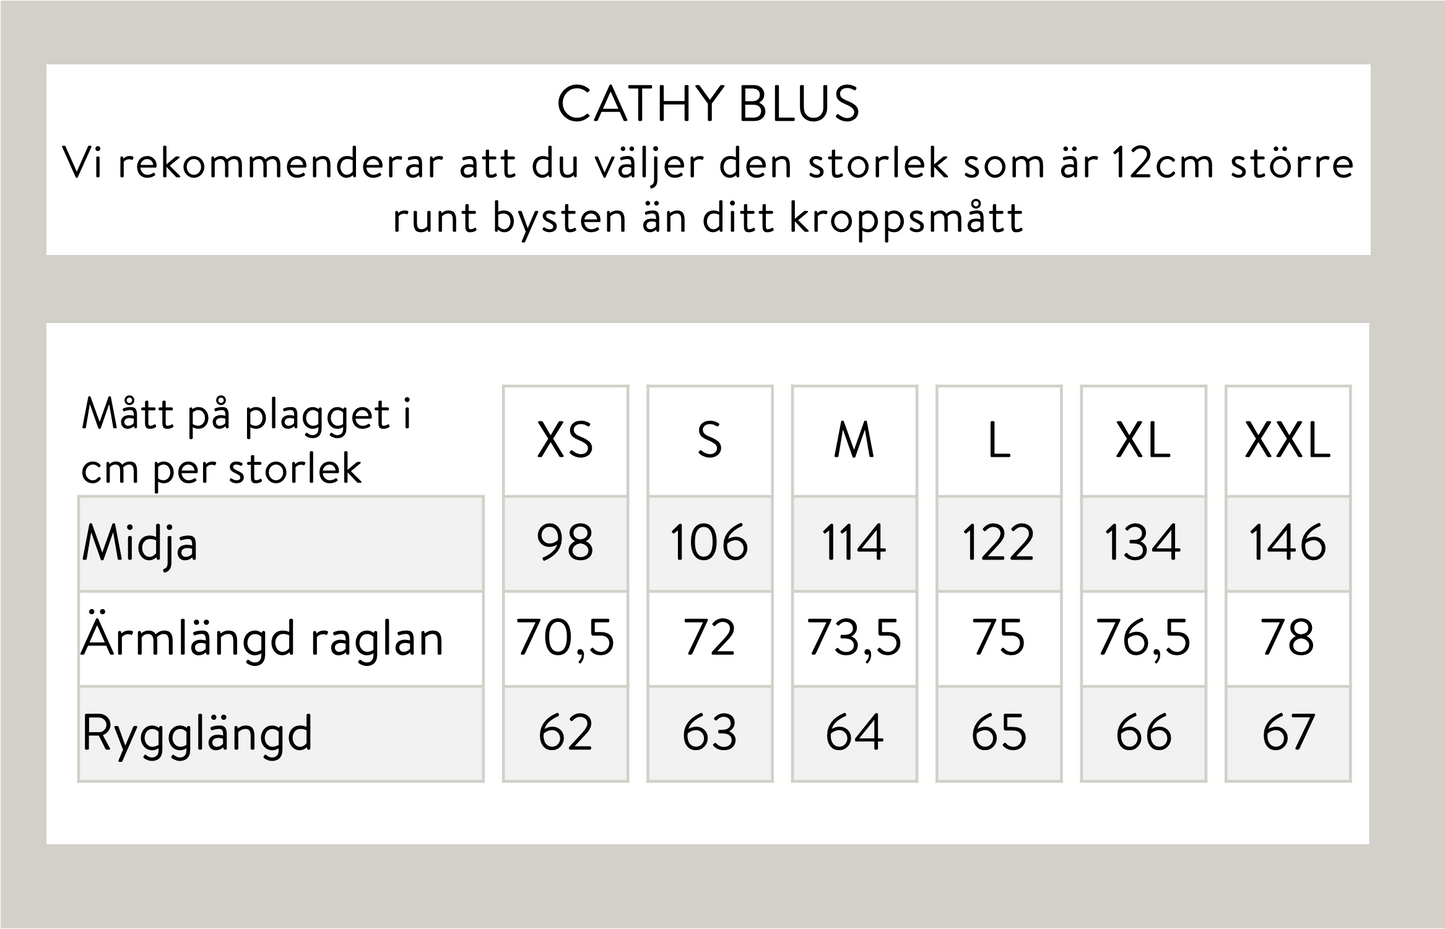 Cathy blus - Vit